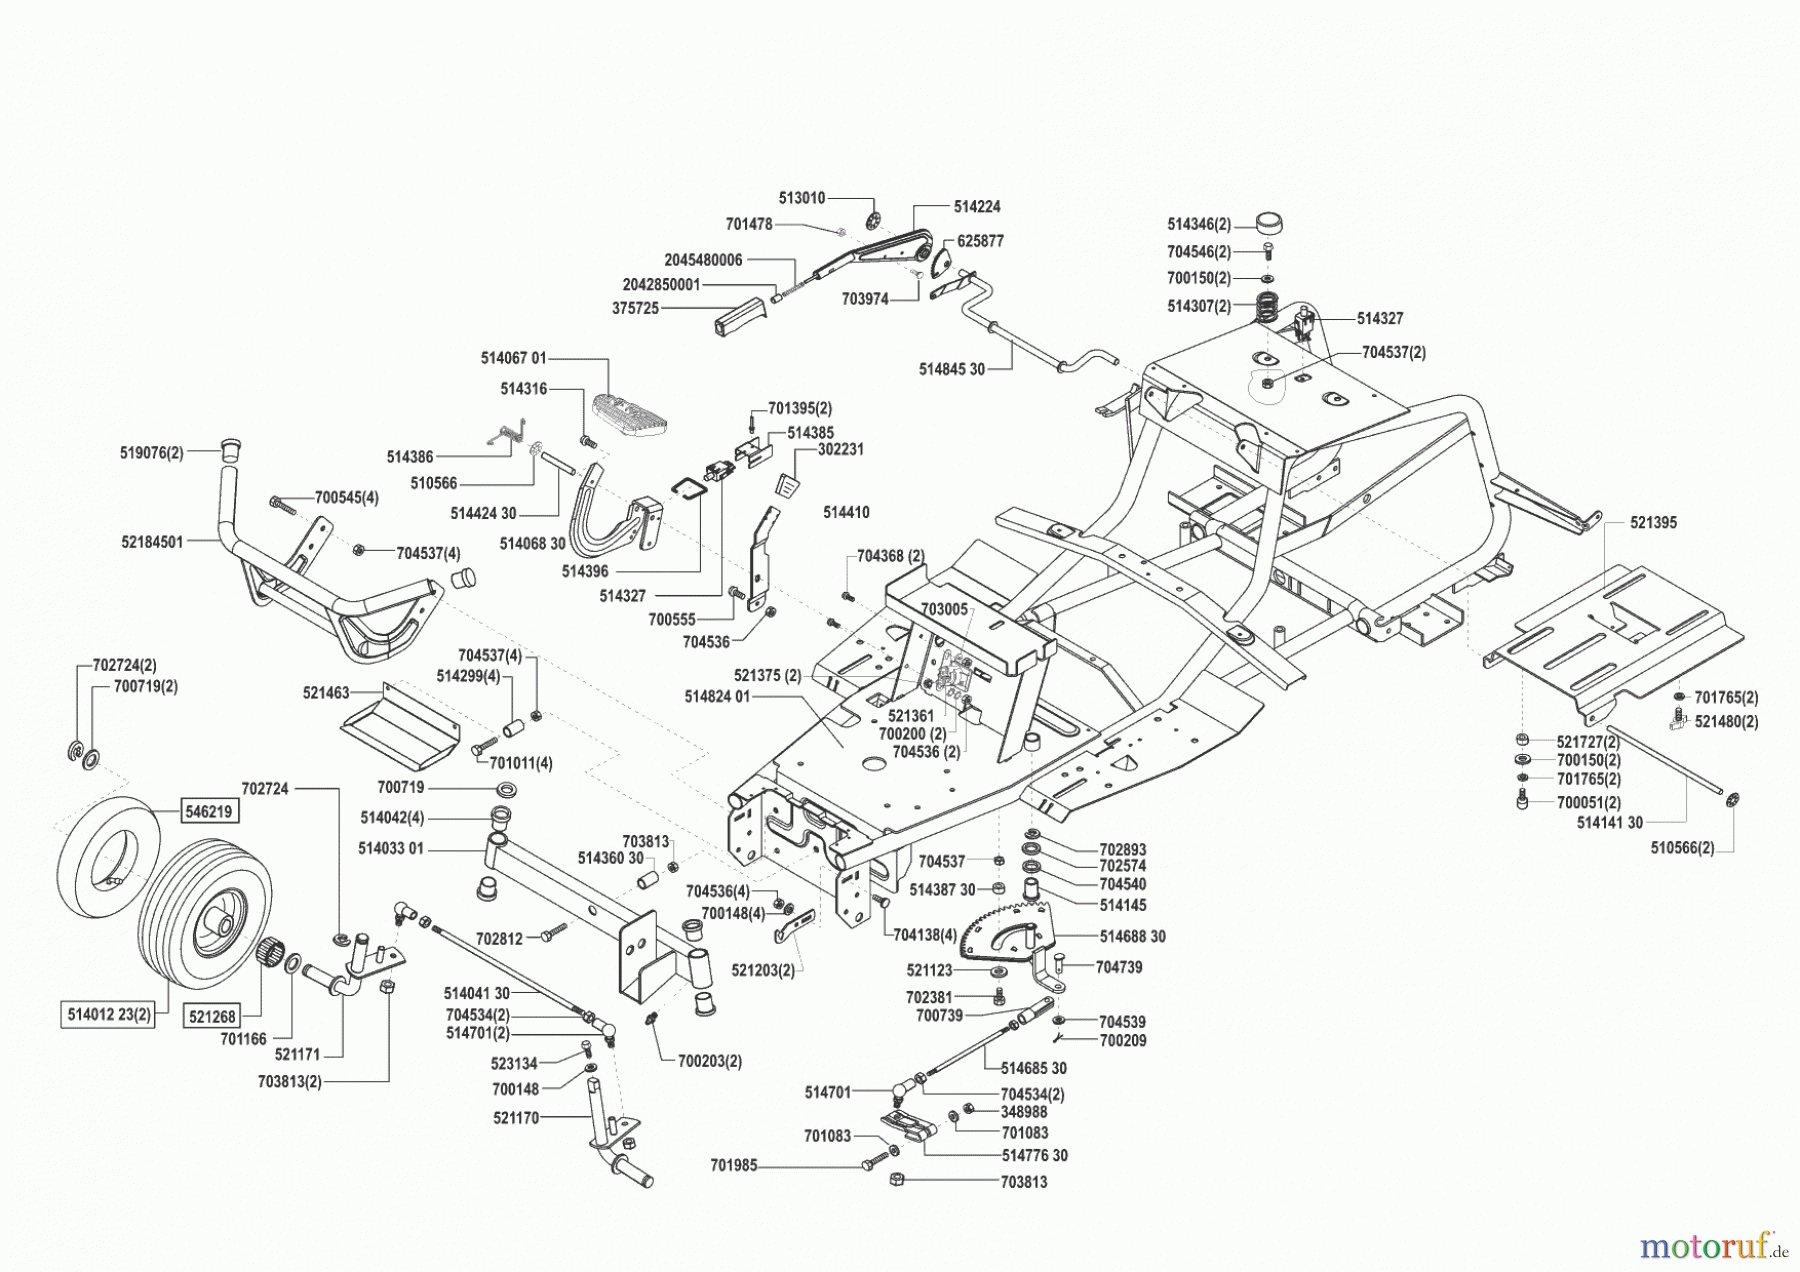  Concord Gartentechnik Rasentraktor T13-102 MAS  10/2002 Seite 2